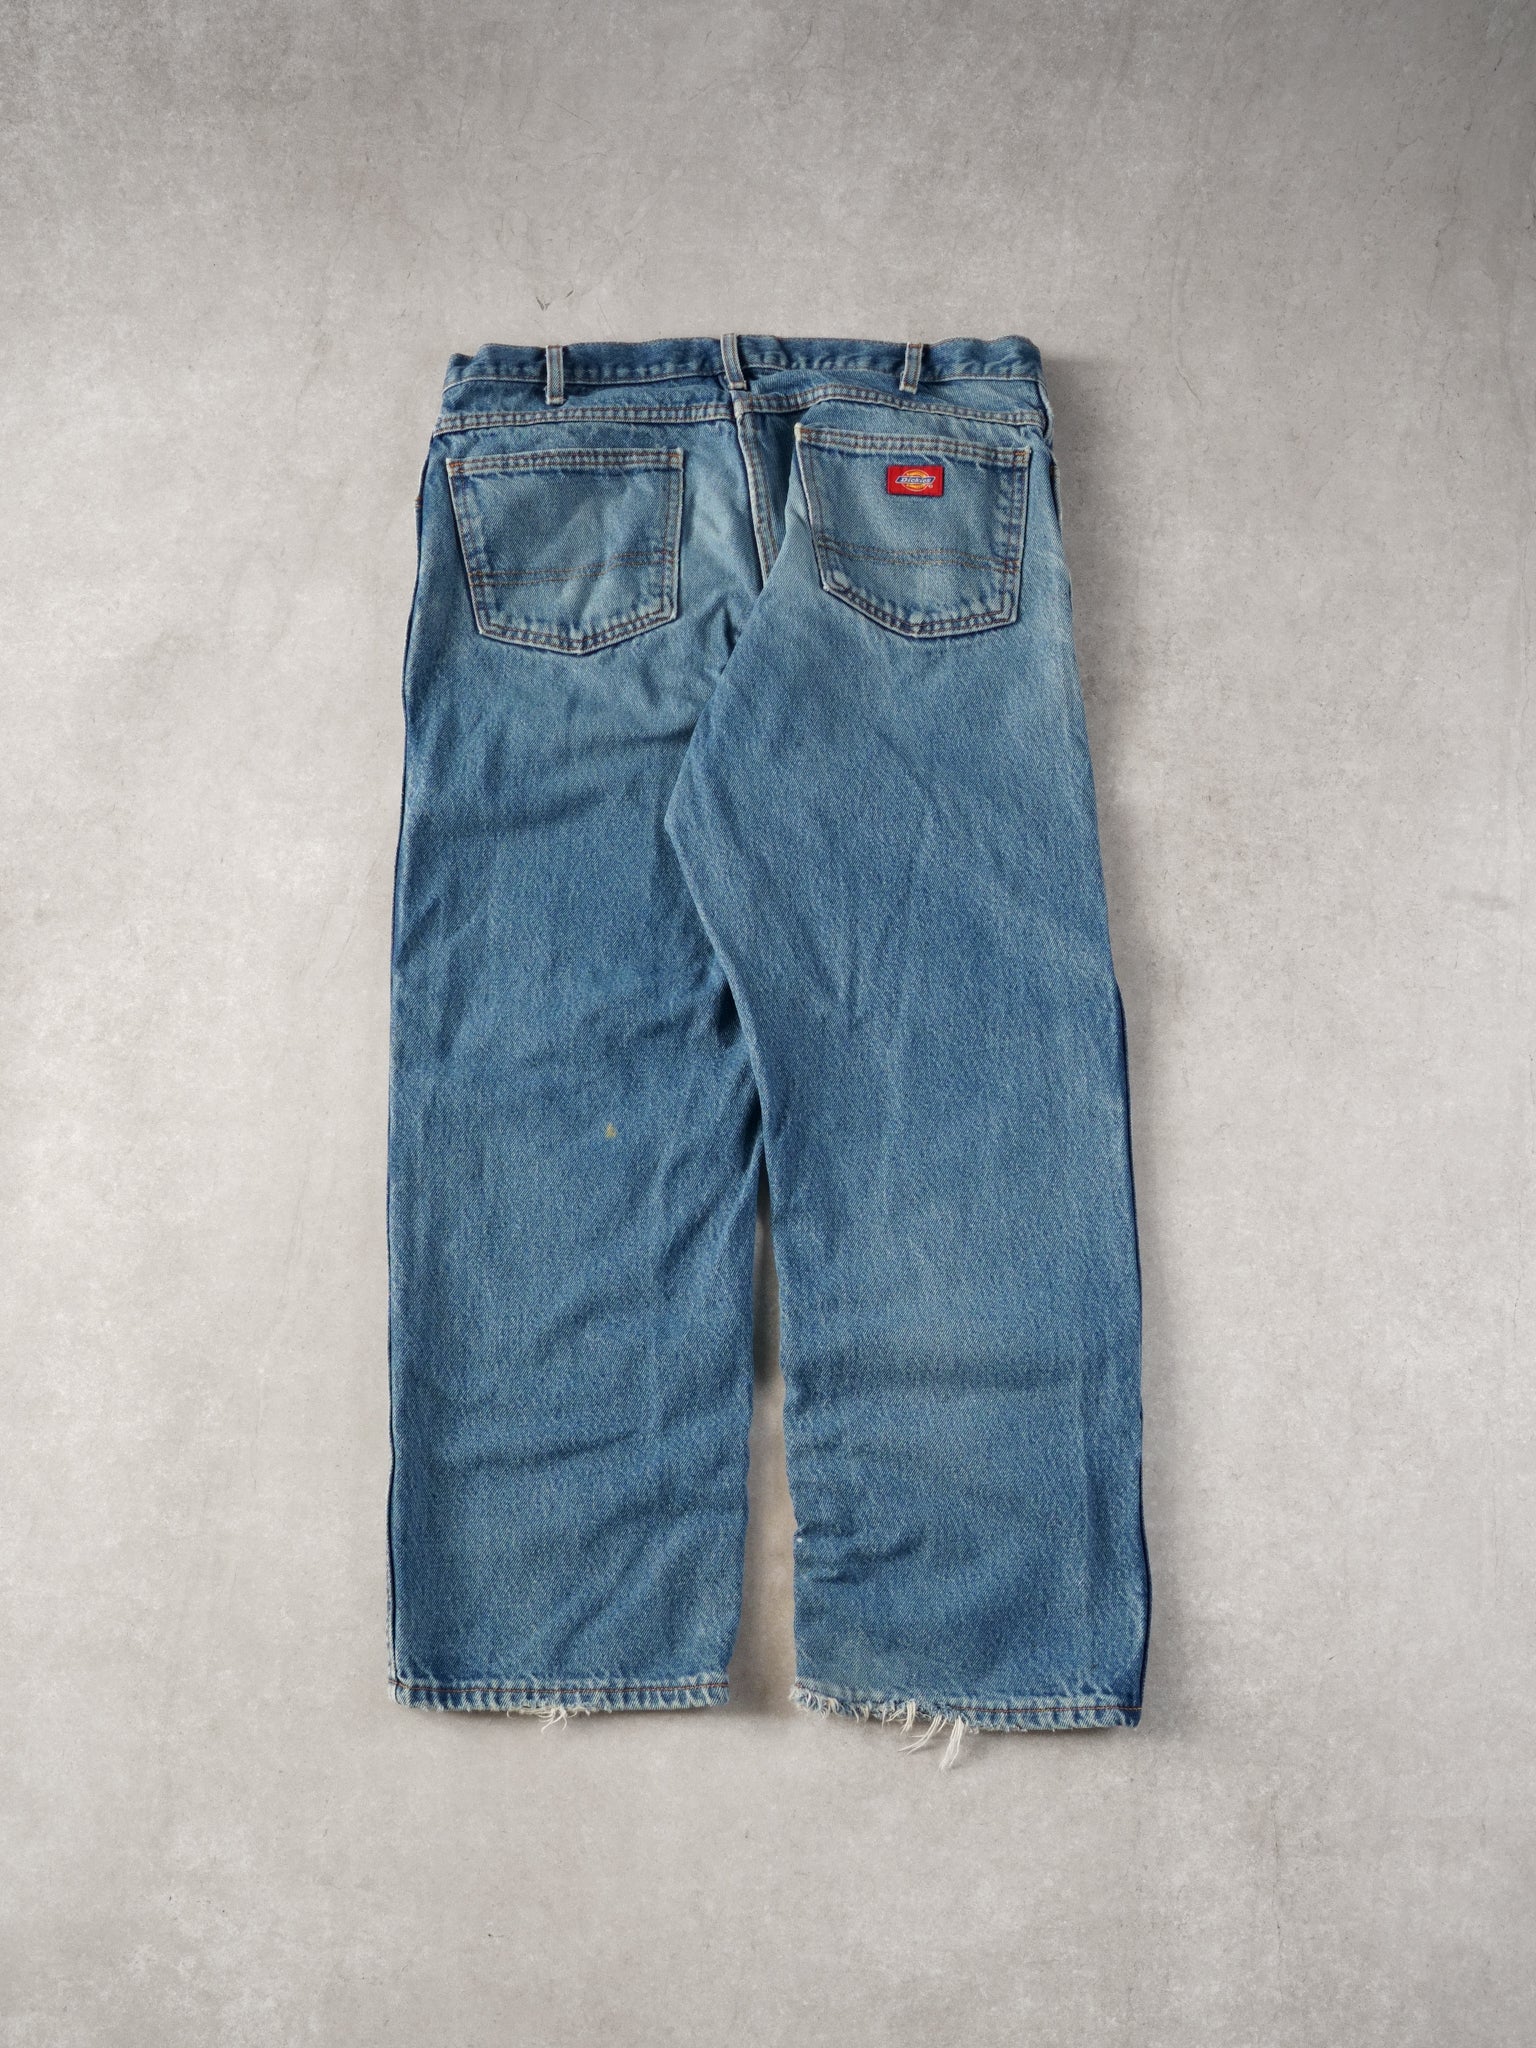 Vintage 90s Light Blue Dickies Workwear Denim Jeans (36x29)